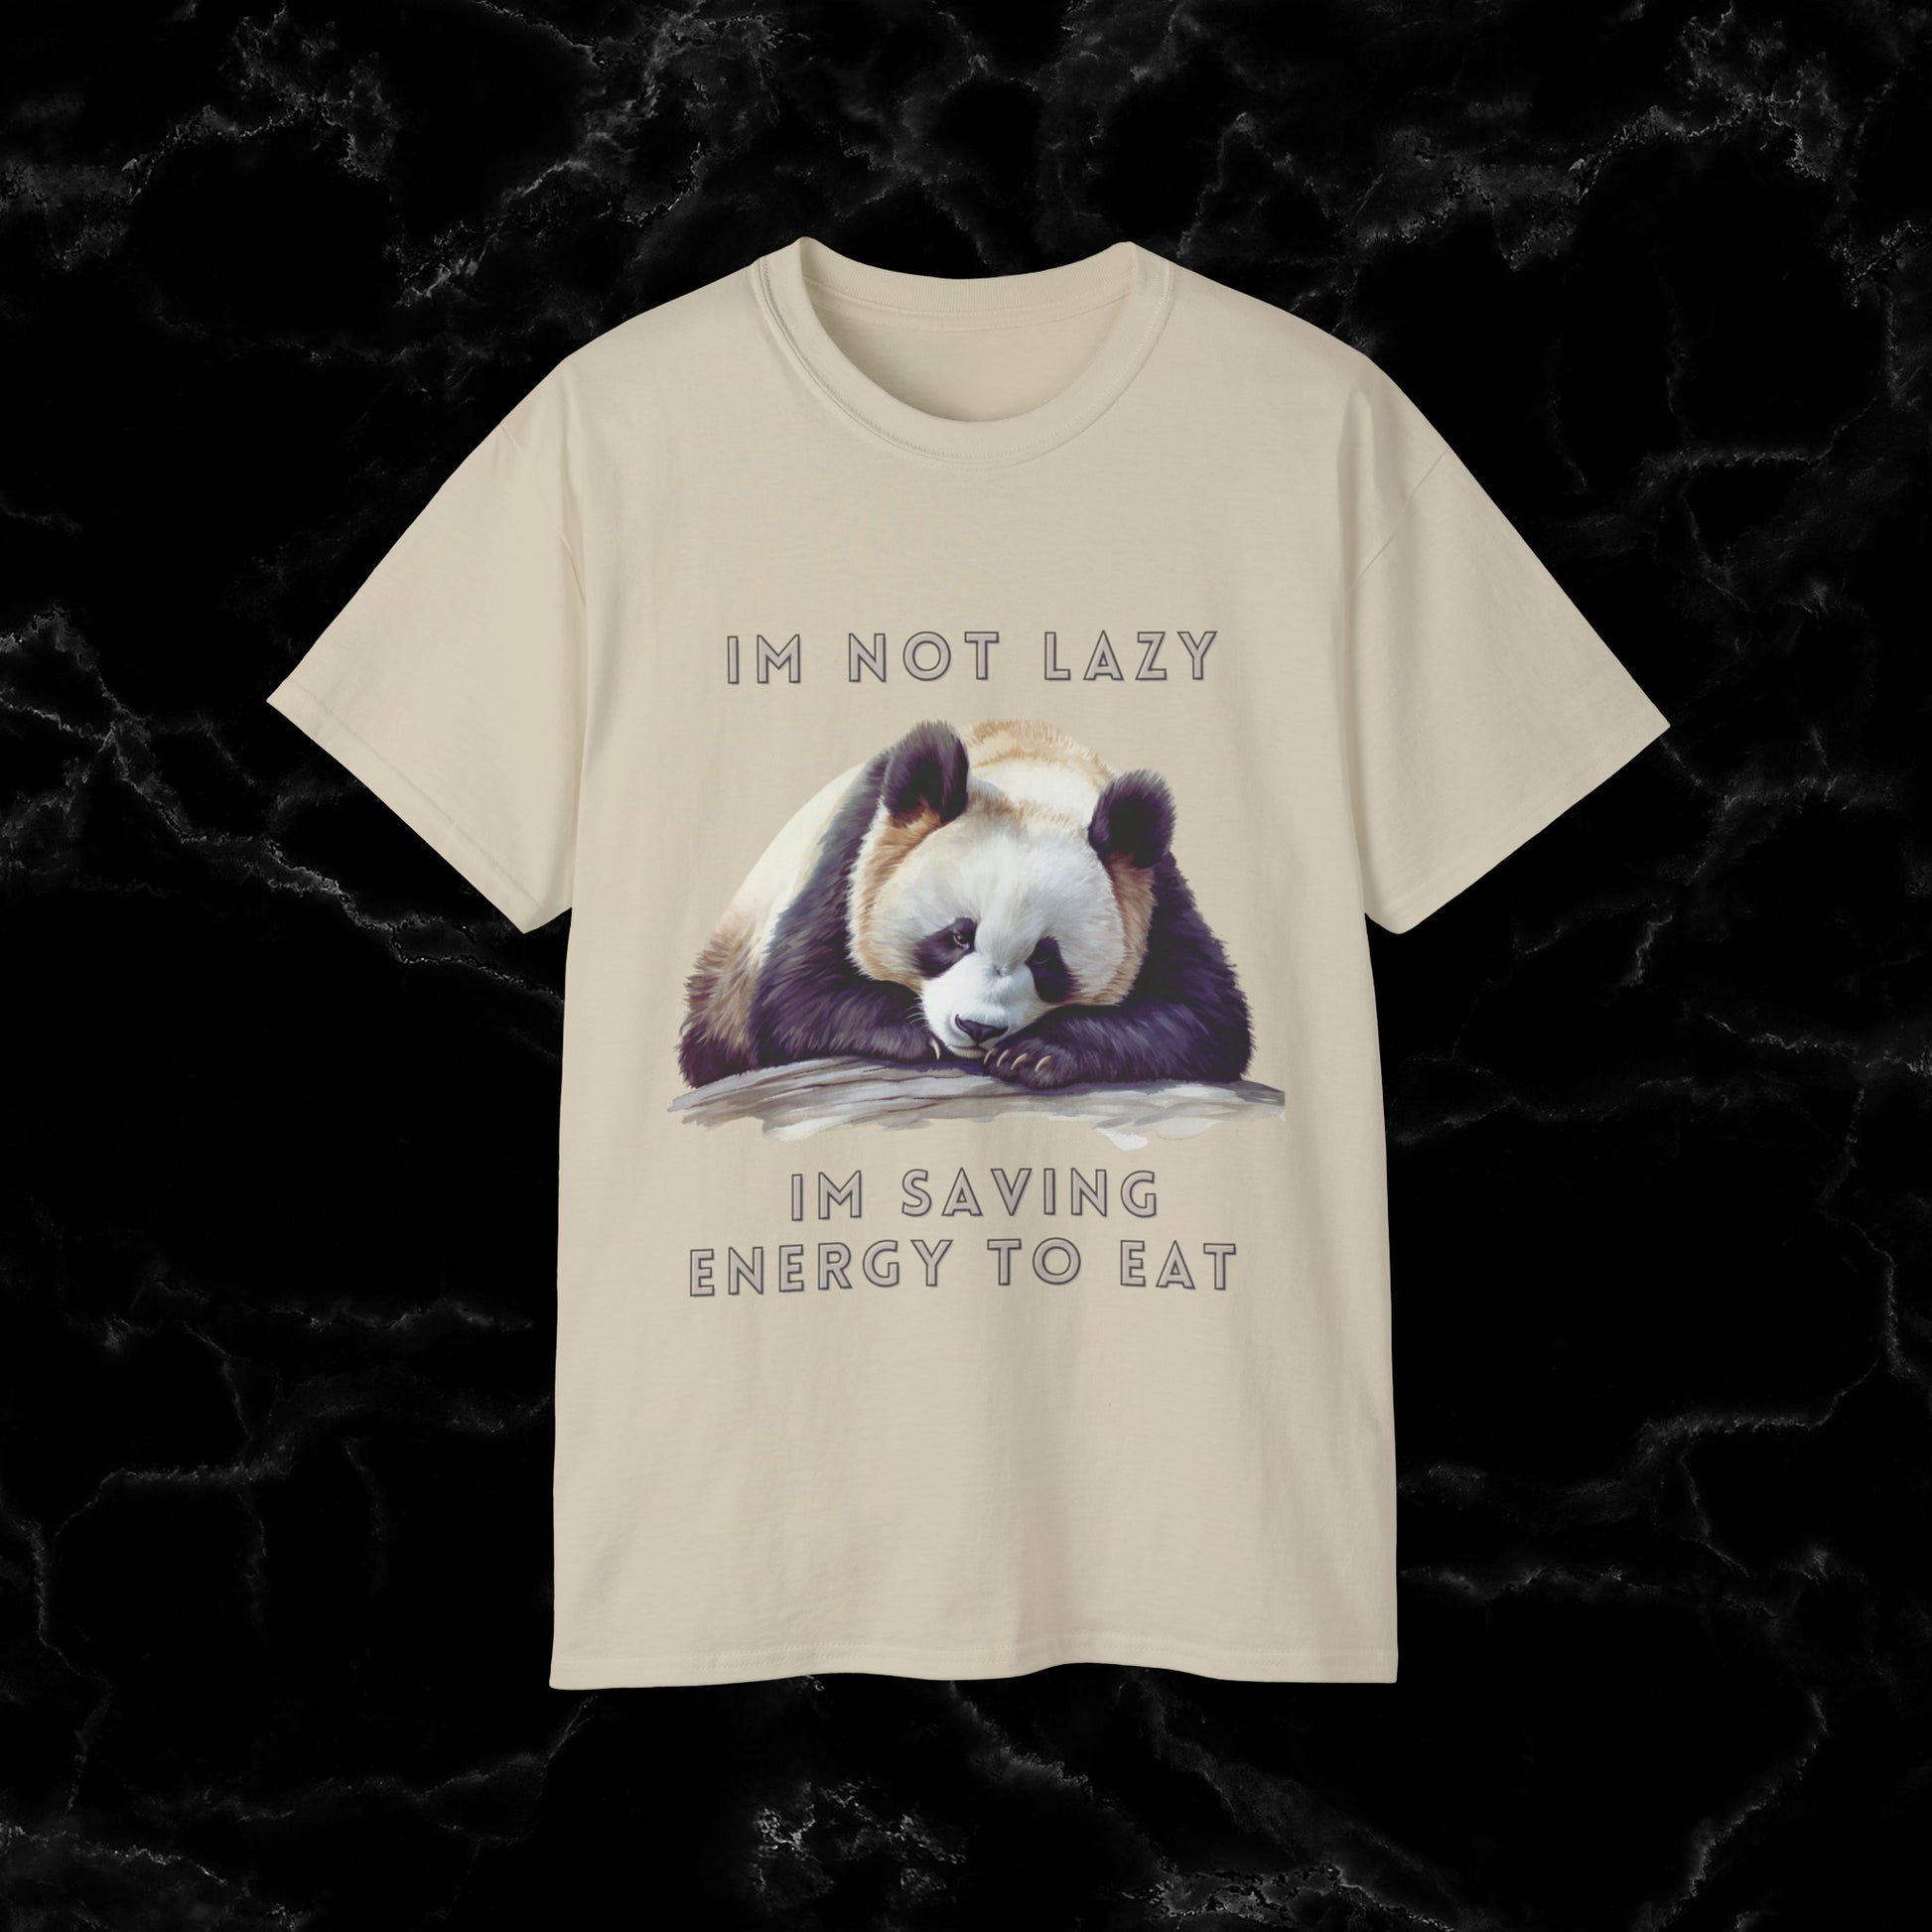 Nap Time Panda Unisex Funny Tee - Hilarious Panda Nap Design - I'm Not Lazy, I'm Saving Energy to Eat T-Shirt Sand M 